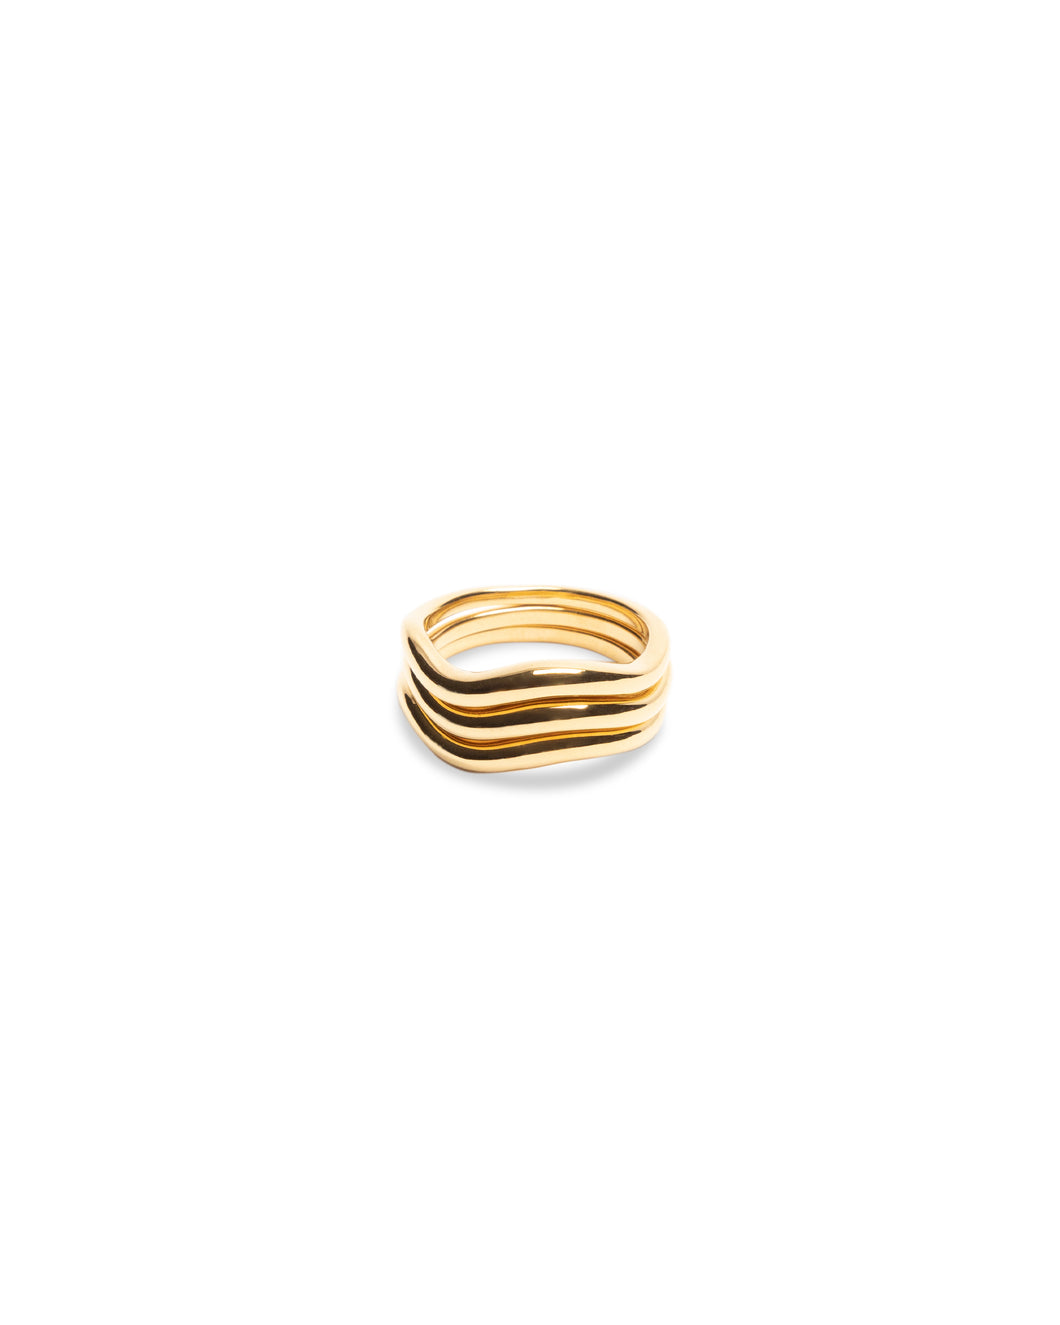 Flash Jewellery 'Ventee Ring Set' - 14K Vermeil Gold